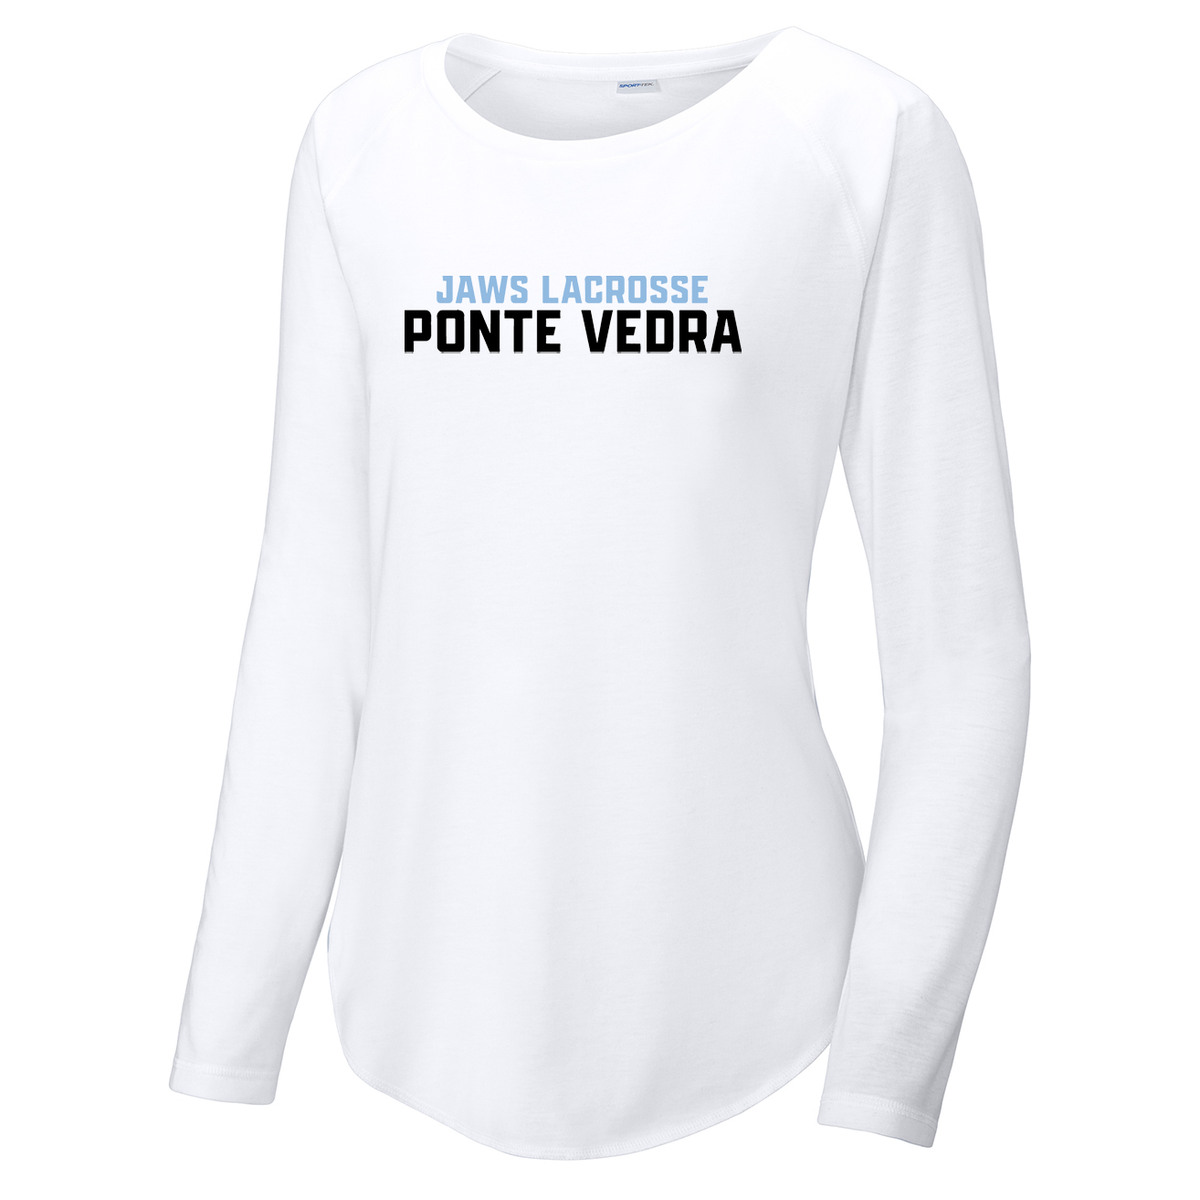 Ponte Vedra JAWS Lacrosse Women's Raglan Long Sleeve CottonTouch